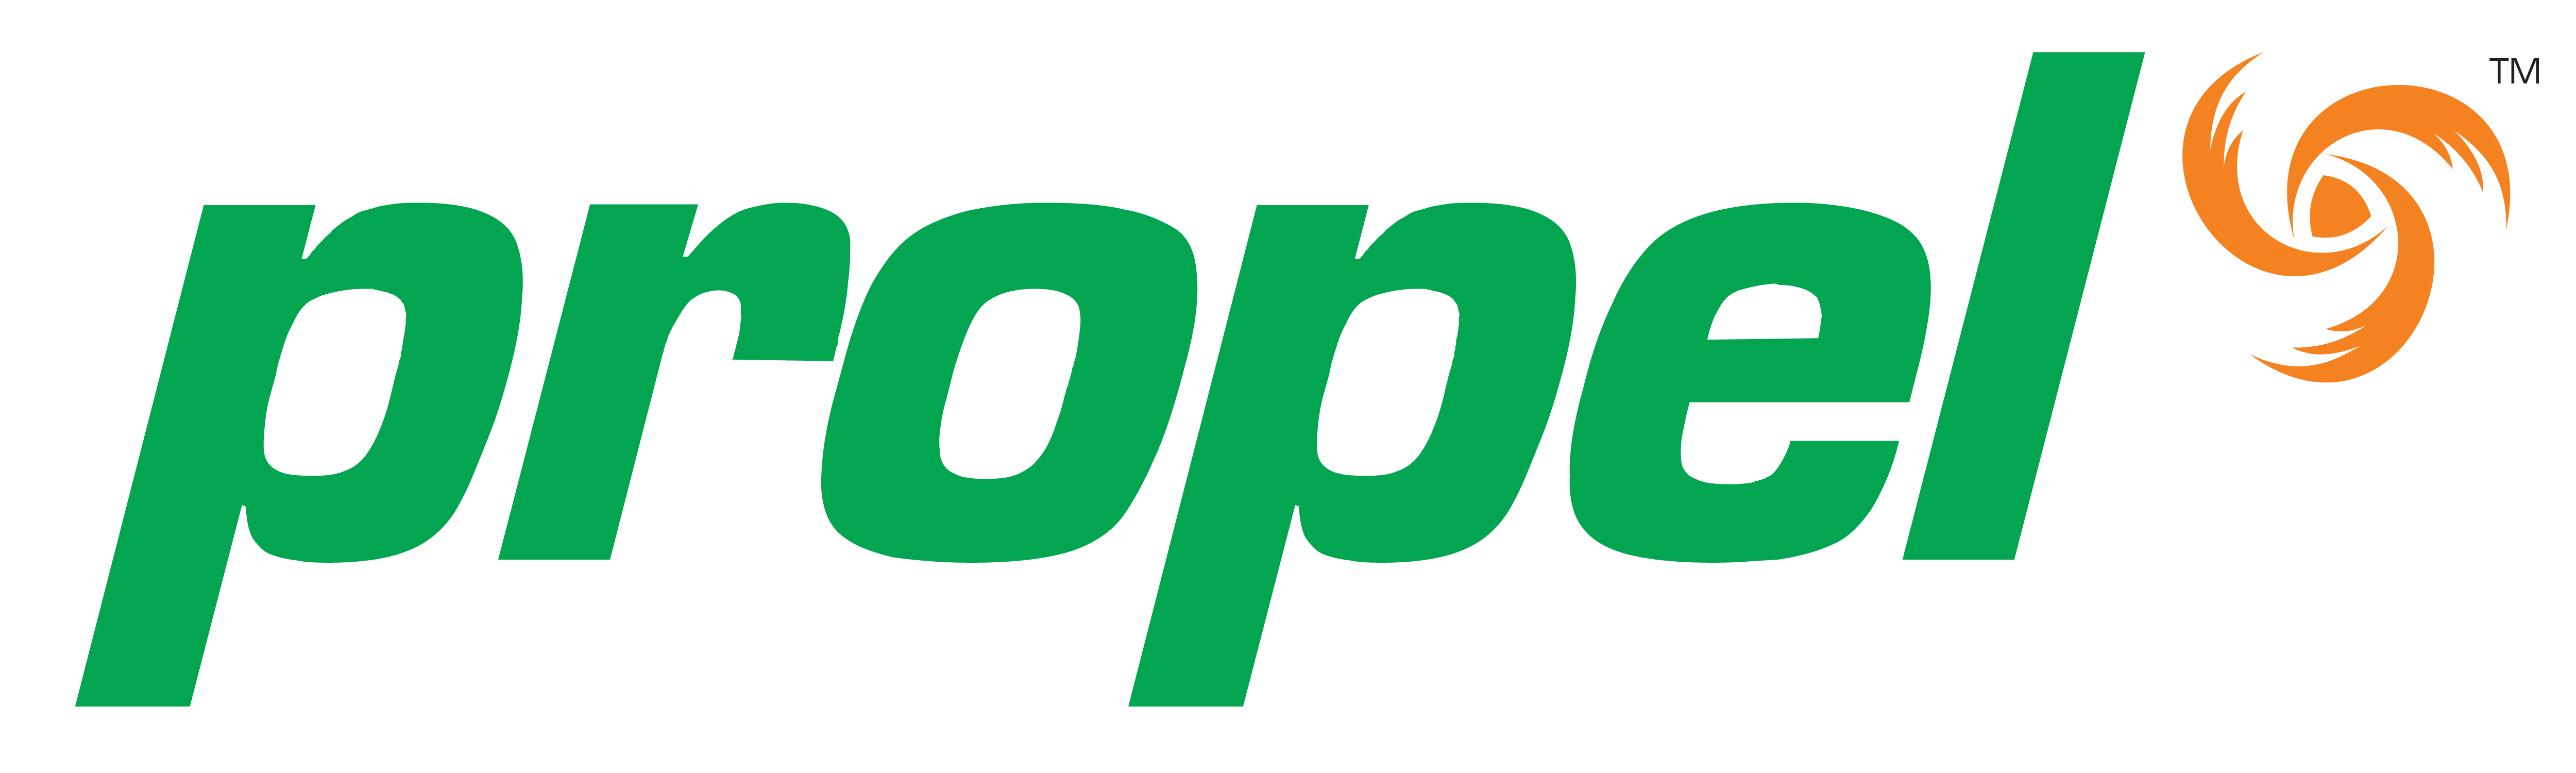 Propel Logo